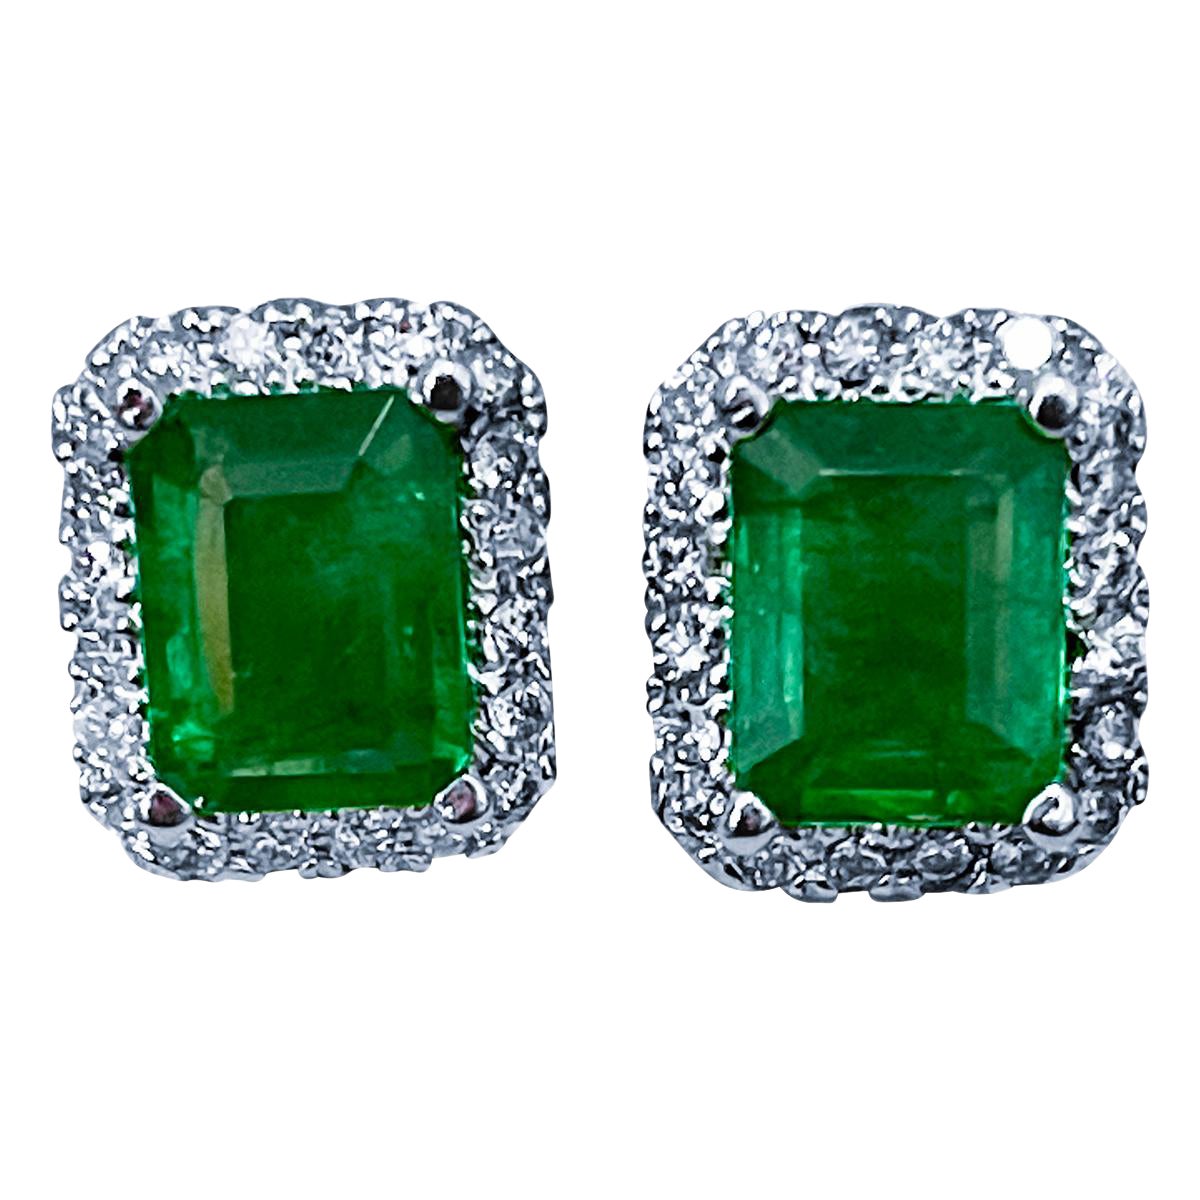 7 Carat Emerald Cut Emerald & 1.5 Ct Diamond Stud Earrings 14 Kt White Gold